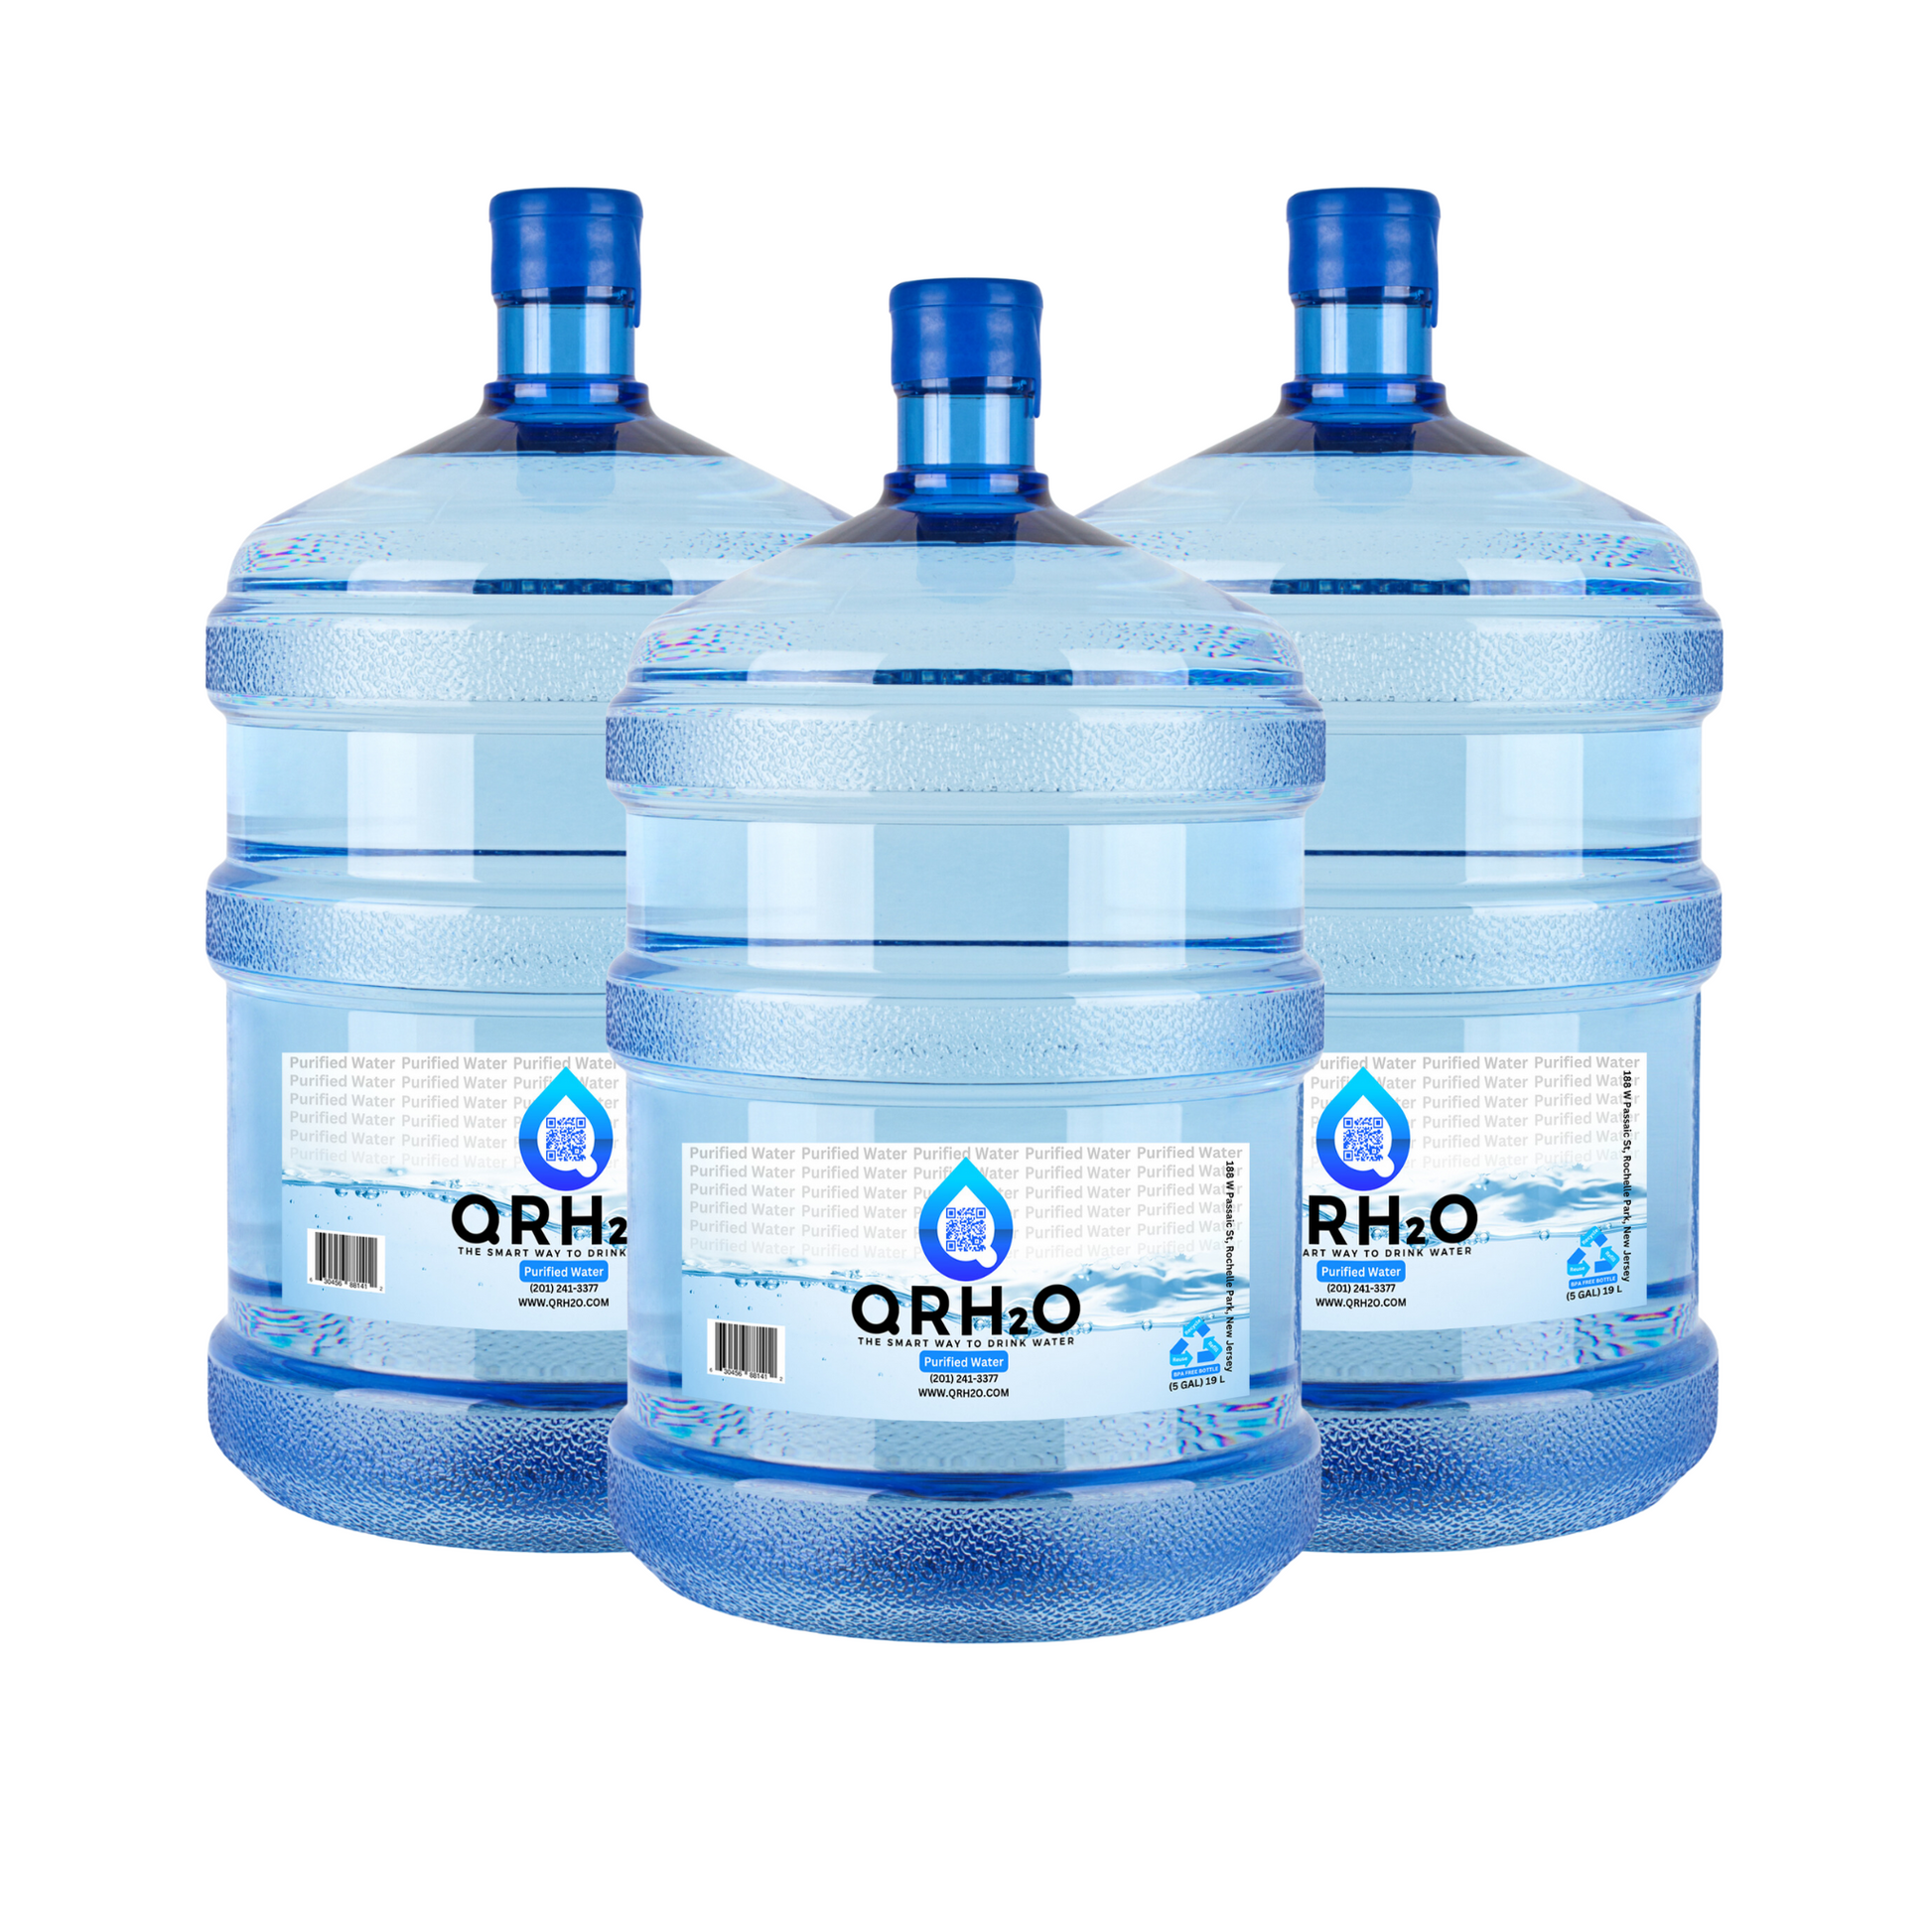 3x 5-Gallon 100% Purified Water – QRH2O